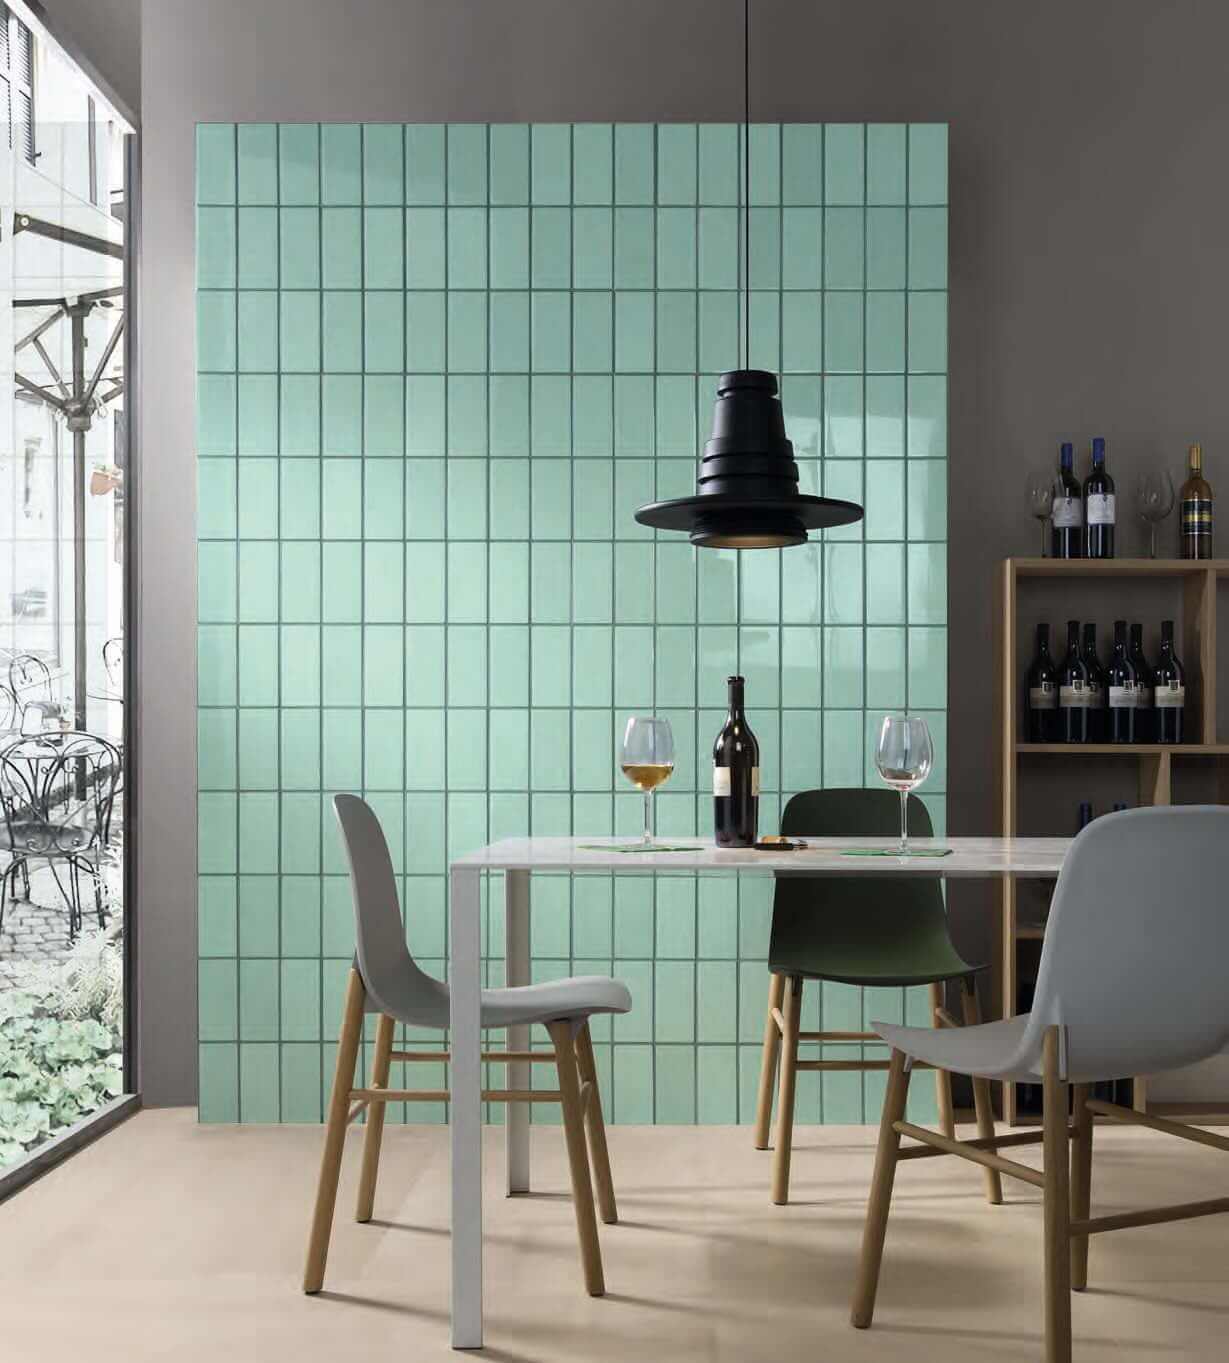 Pastel aqua tile wall in a vertical grid